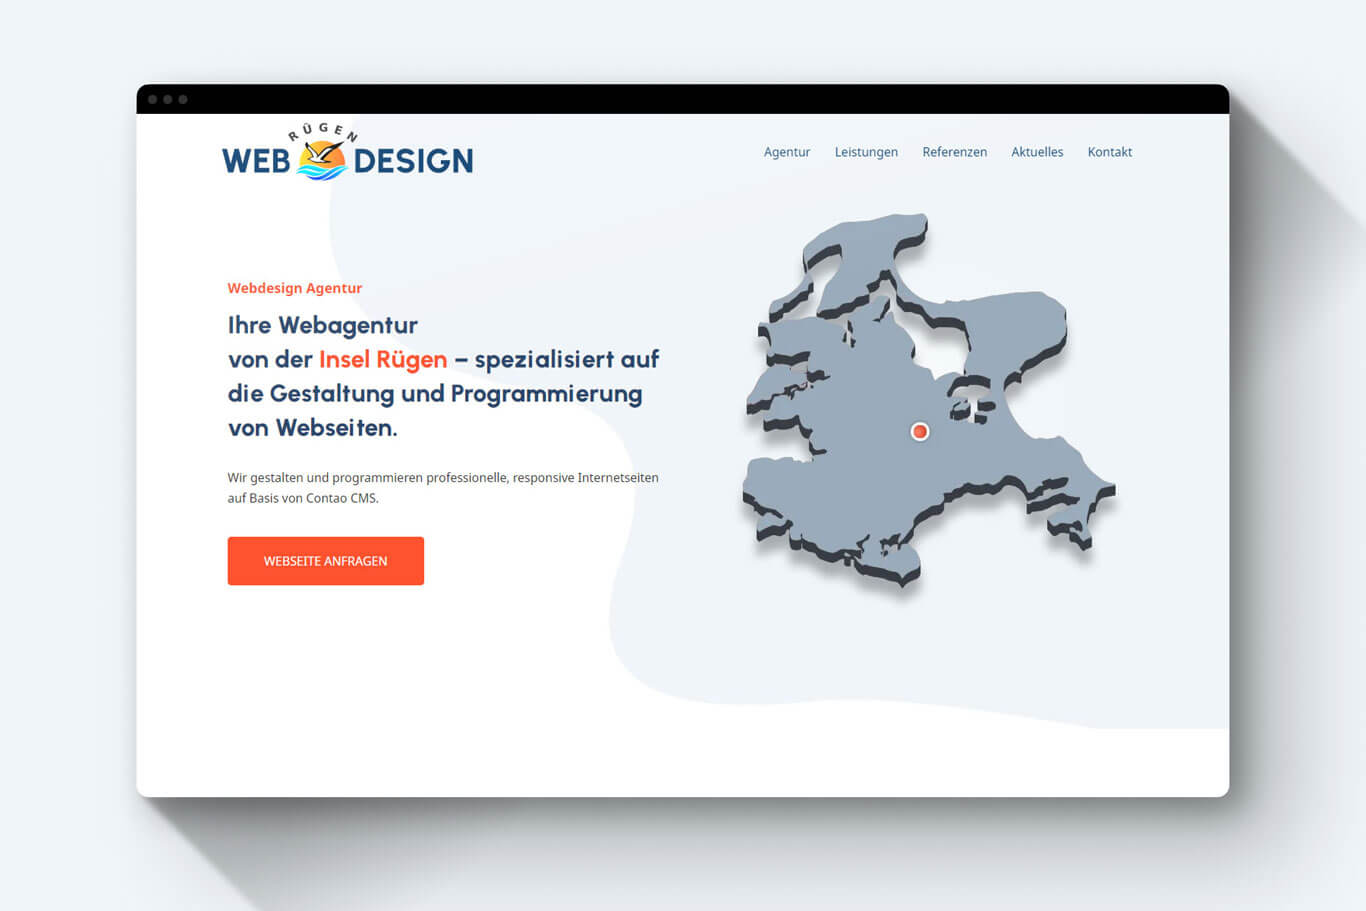 (c) Ruegen-web-design.de